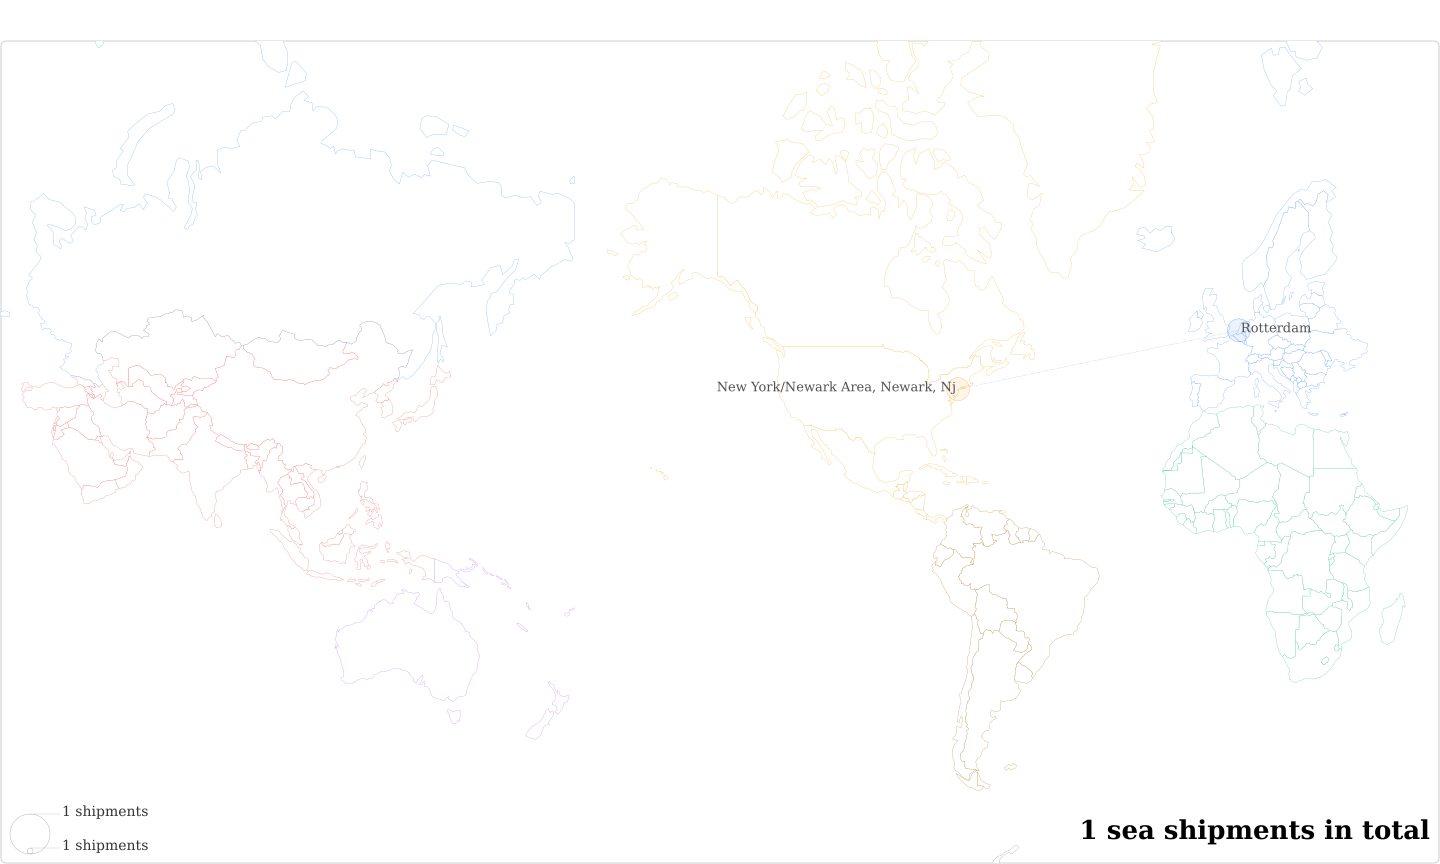 Simone Tenschert Schug's Imports Per Country Map